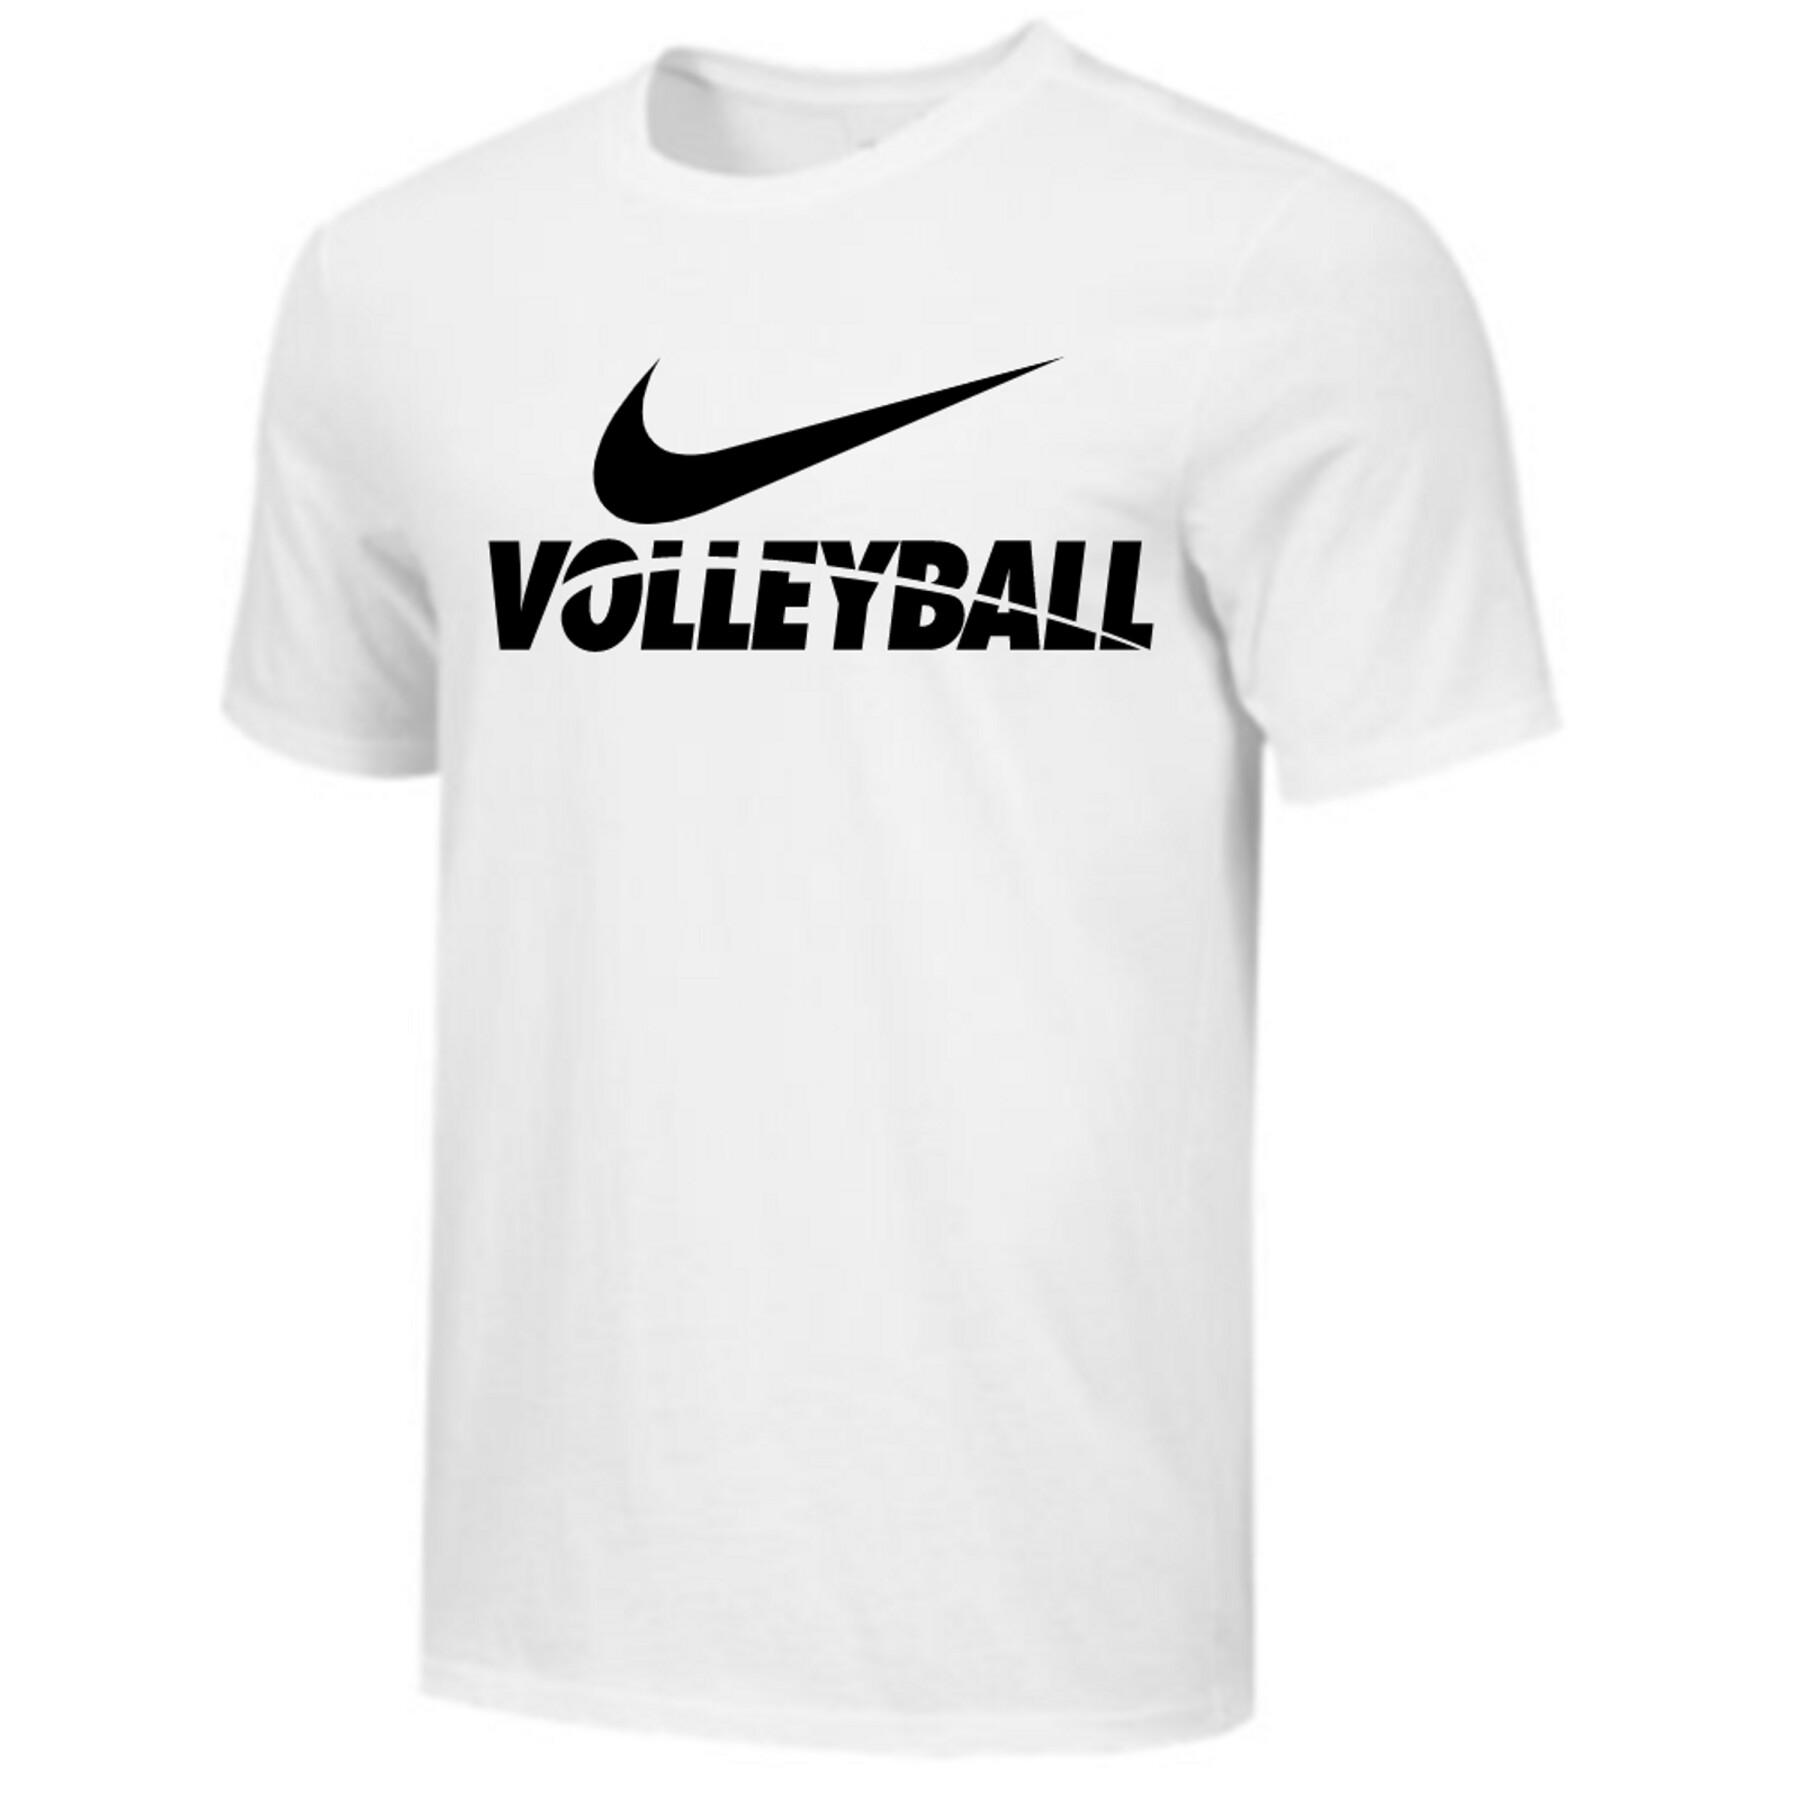 T-shirt femme Nike Volleyball WM - T-shirts et polos - Vêtements - Textile